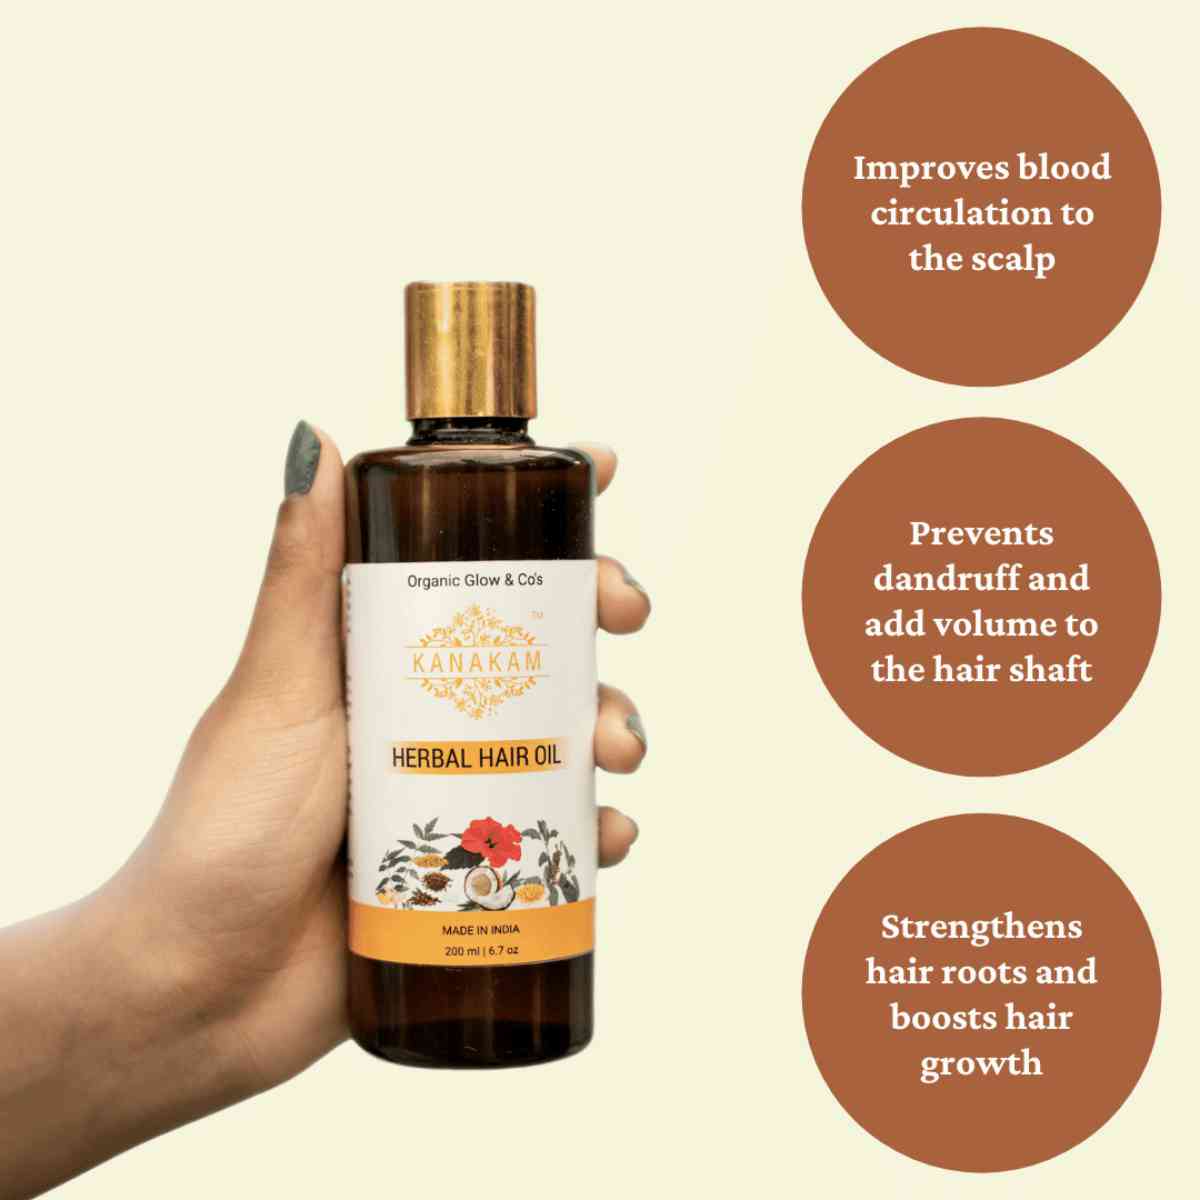 Kanakam home spa kit herbal hair oil